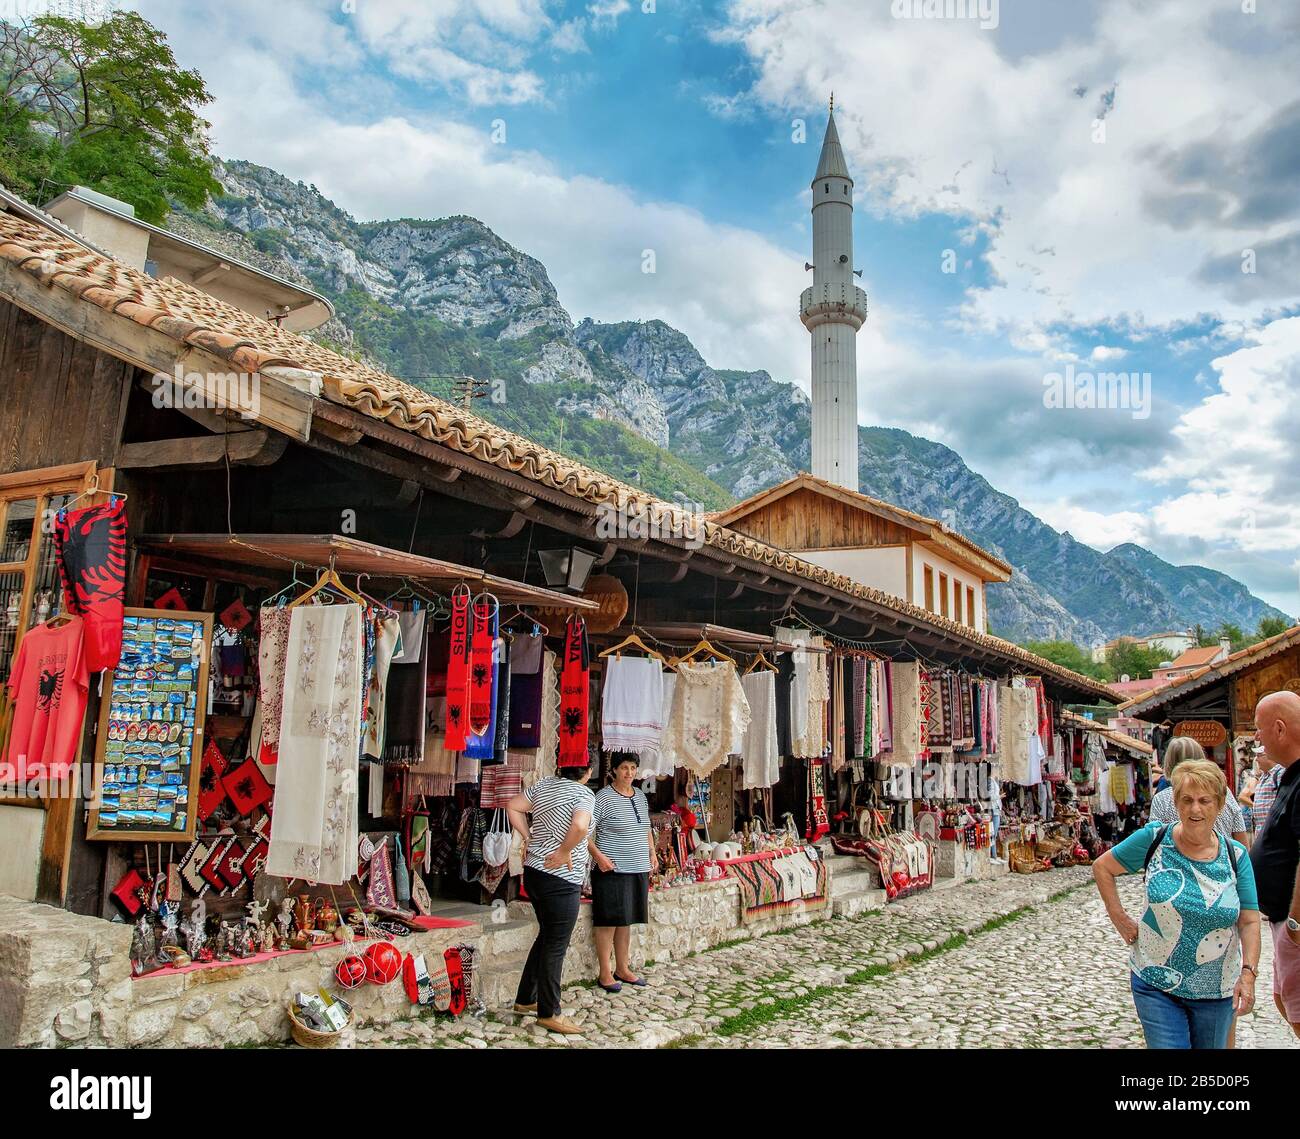 Traditional Ottoman market in Kruja, near Tirana, birth town of National Hero Skanderbeg.Flea market in Albania. Antique items and souvenirs for sale. Stock Photo